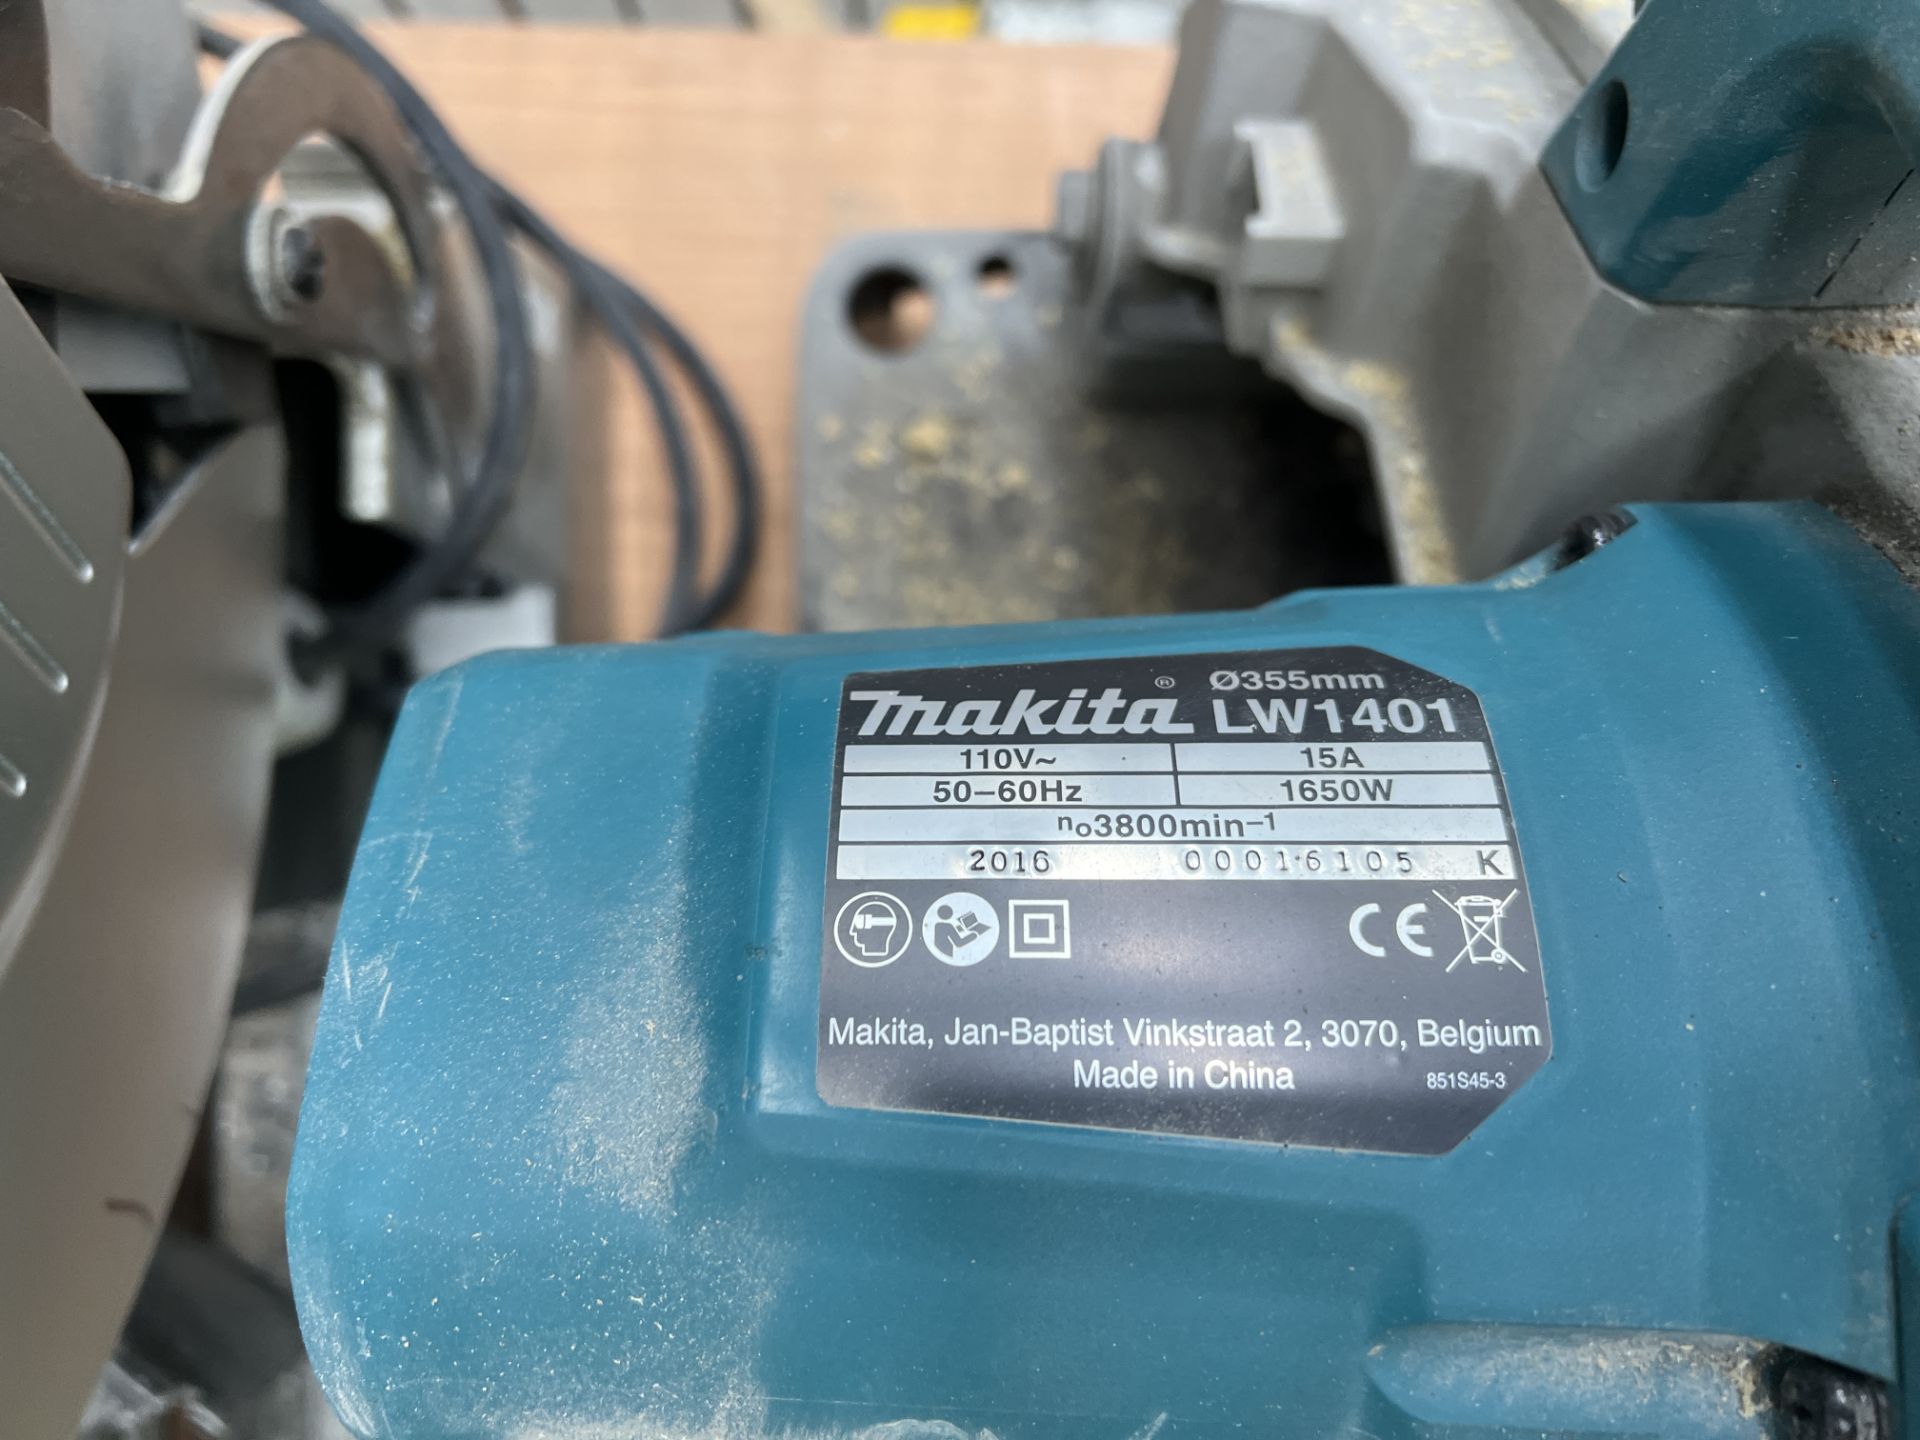 Makita, LW1401 metal 14" cut off saw, 110 volts - Image 3 of 4